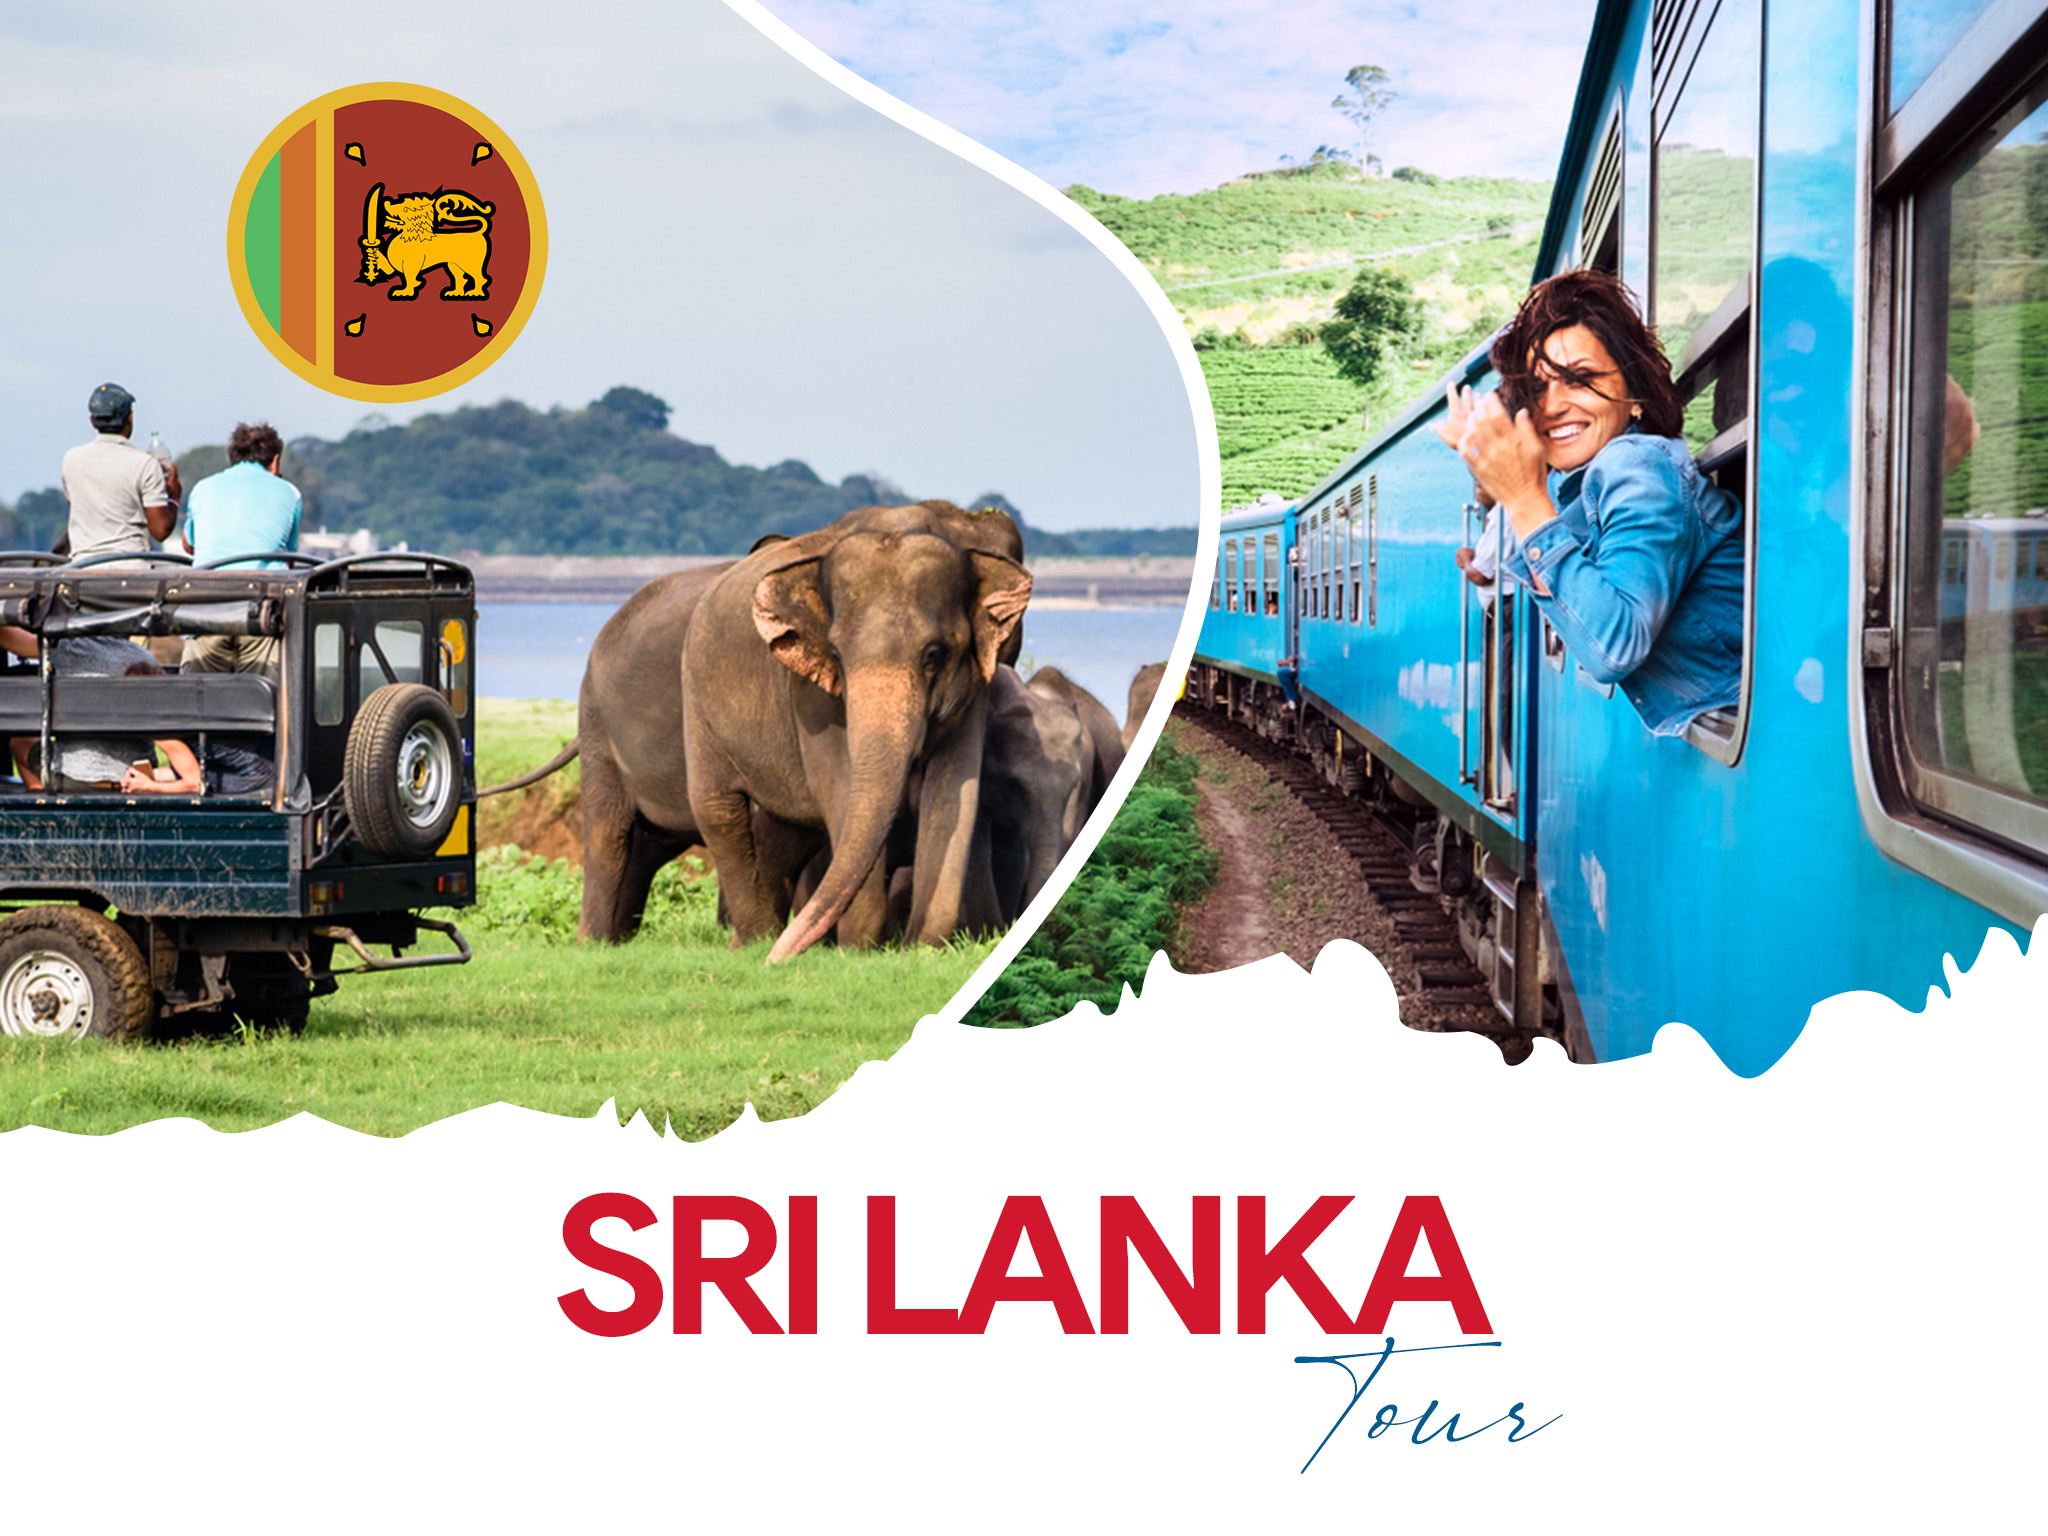 Sri Lanka Tour Package | 5 Days / 4 Nights